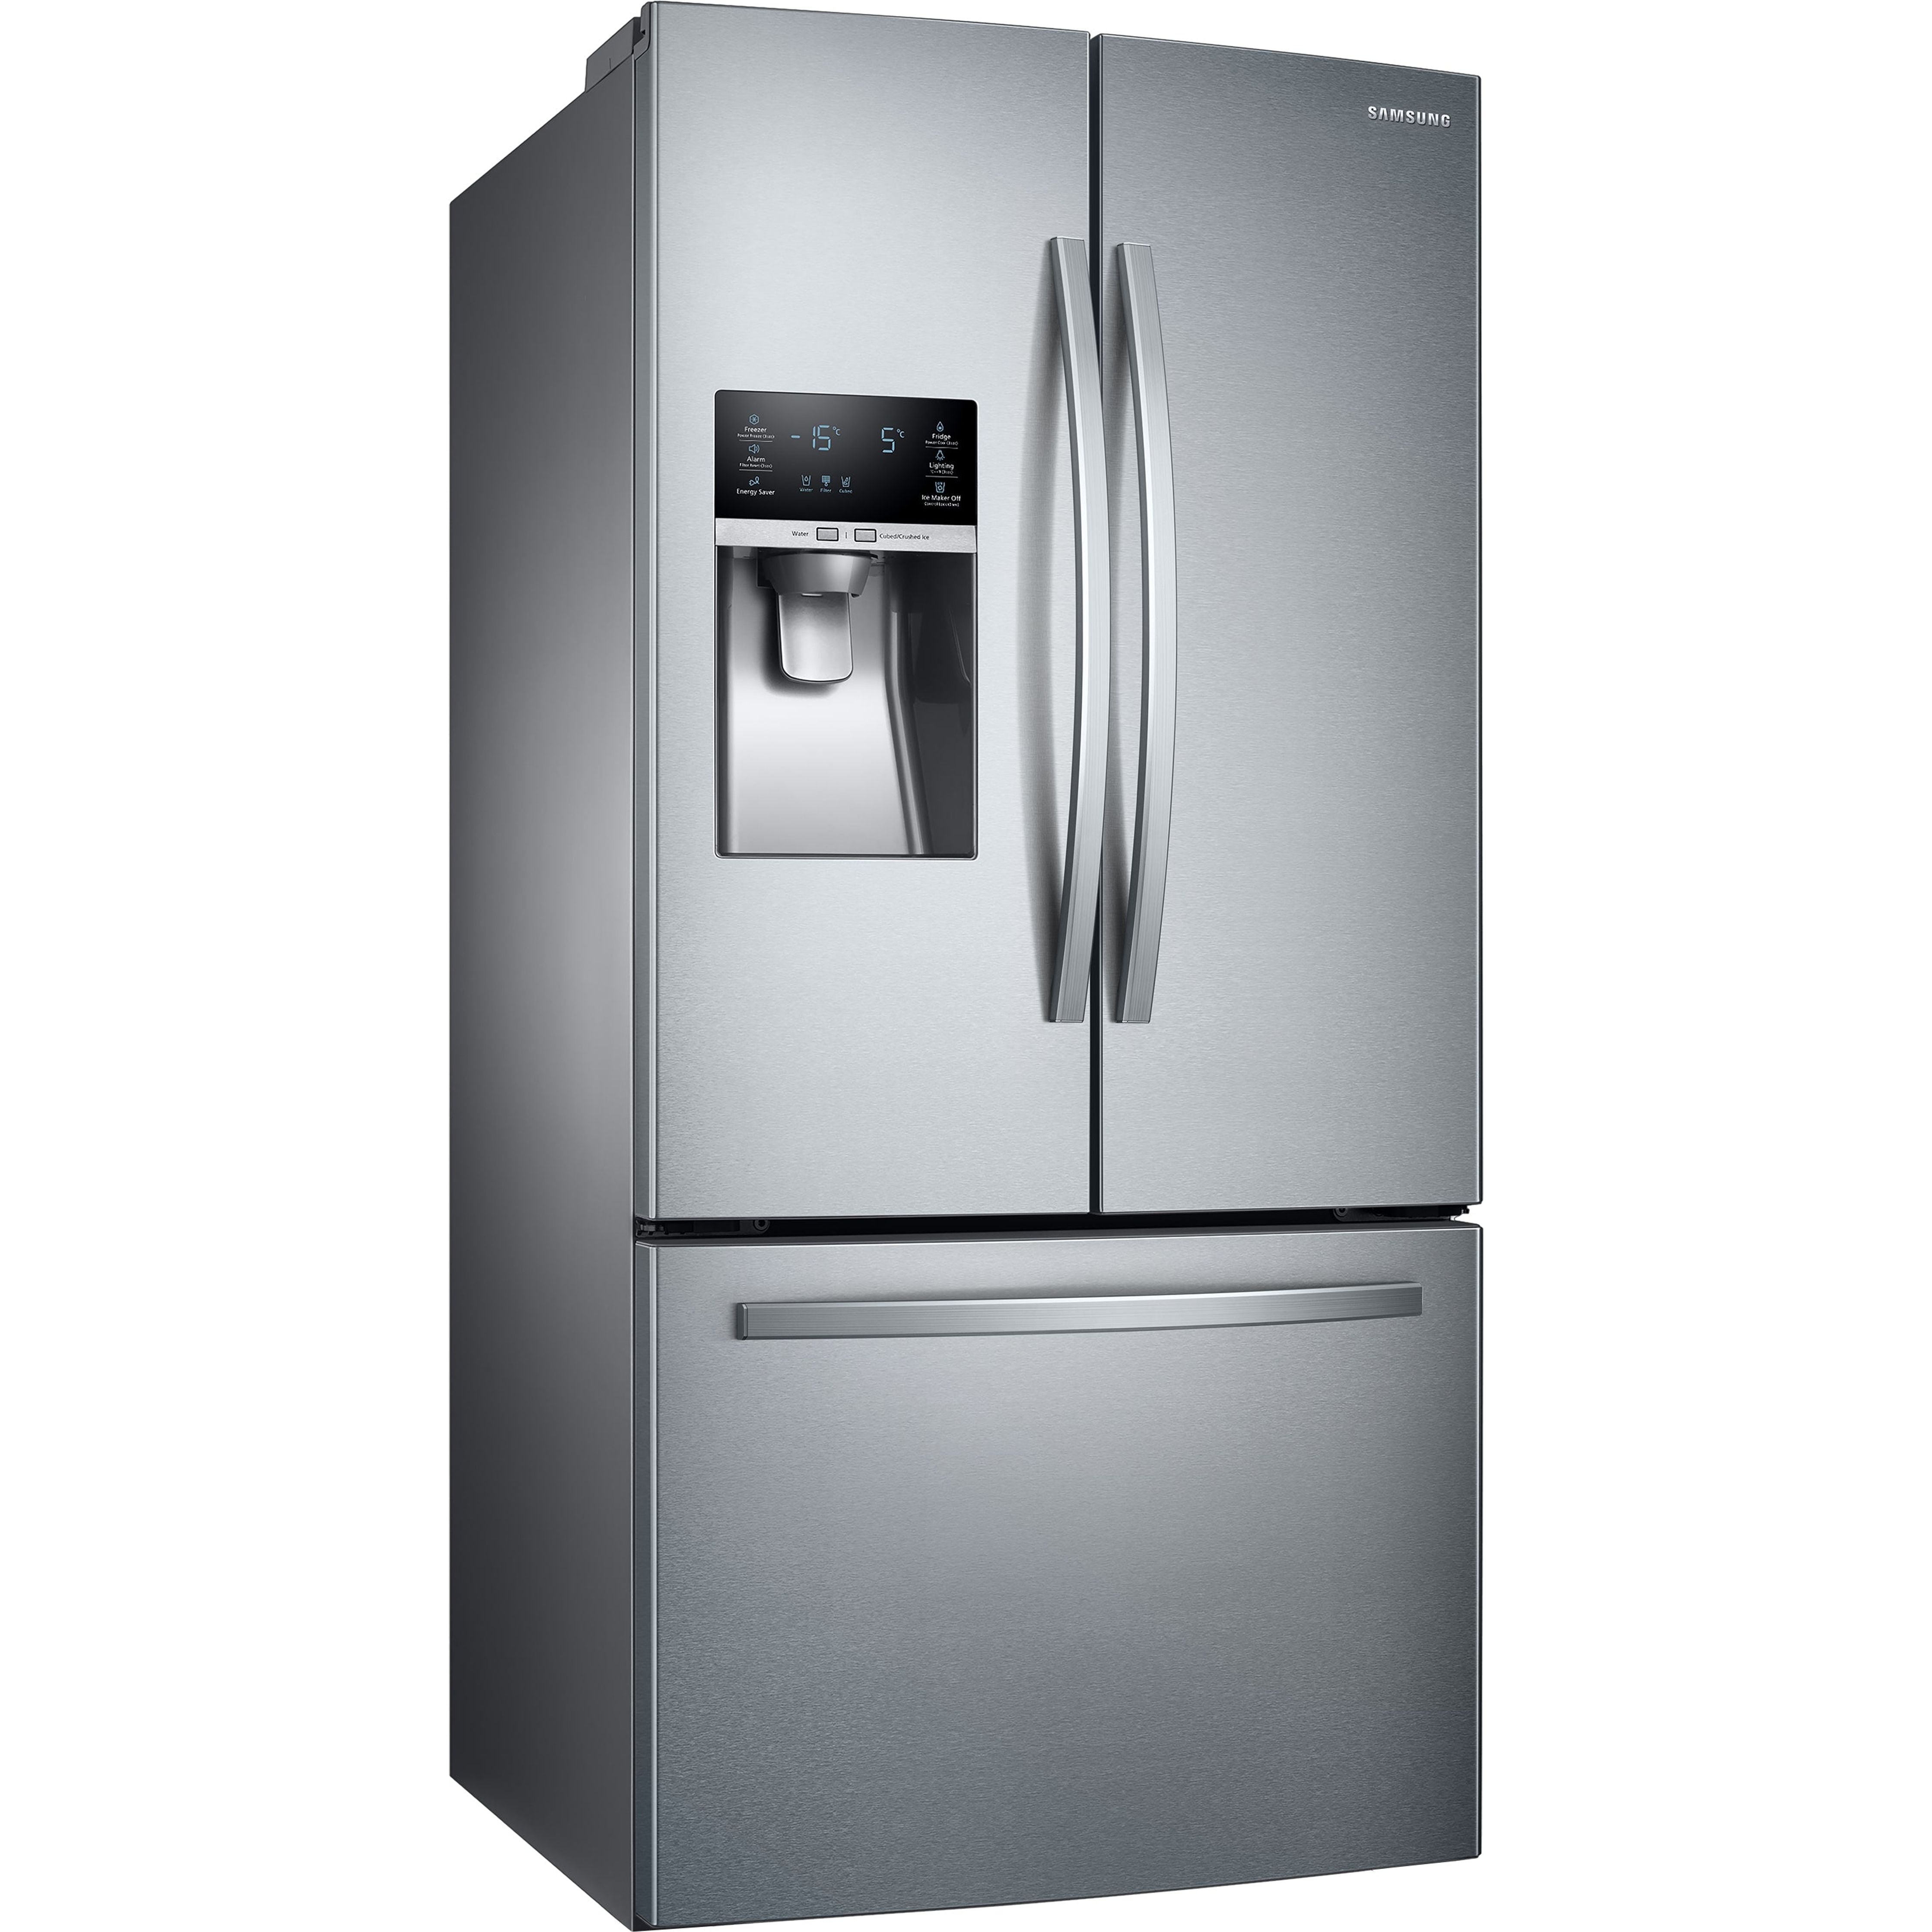 Samsung RF26J7510SR French Door Refrigerator